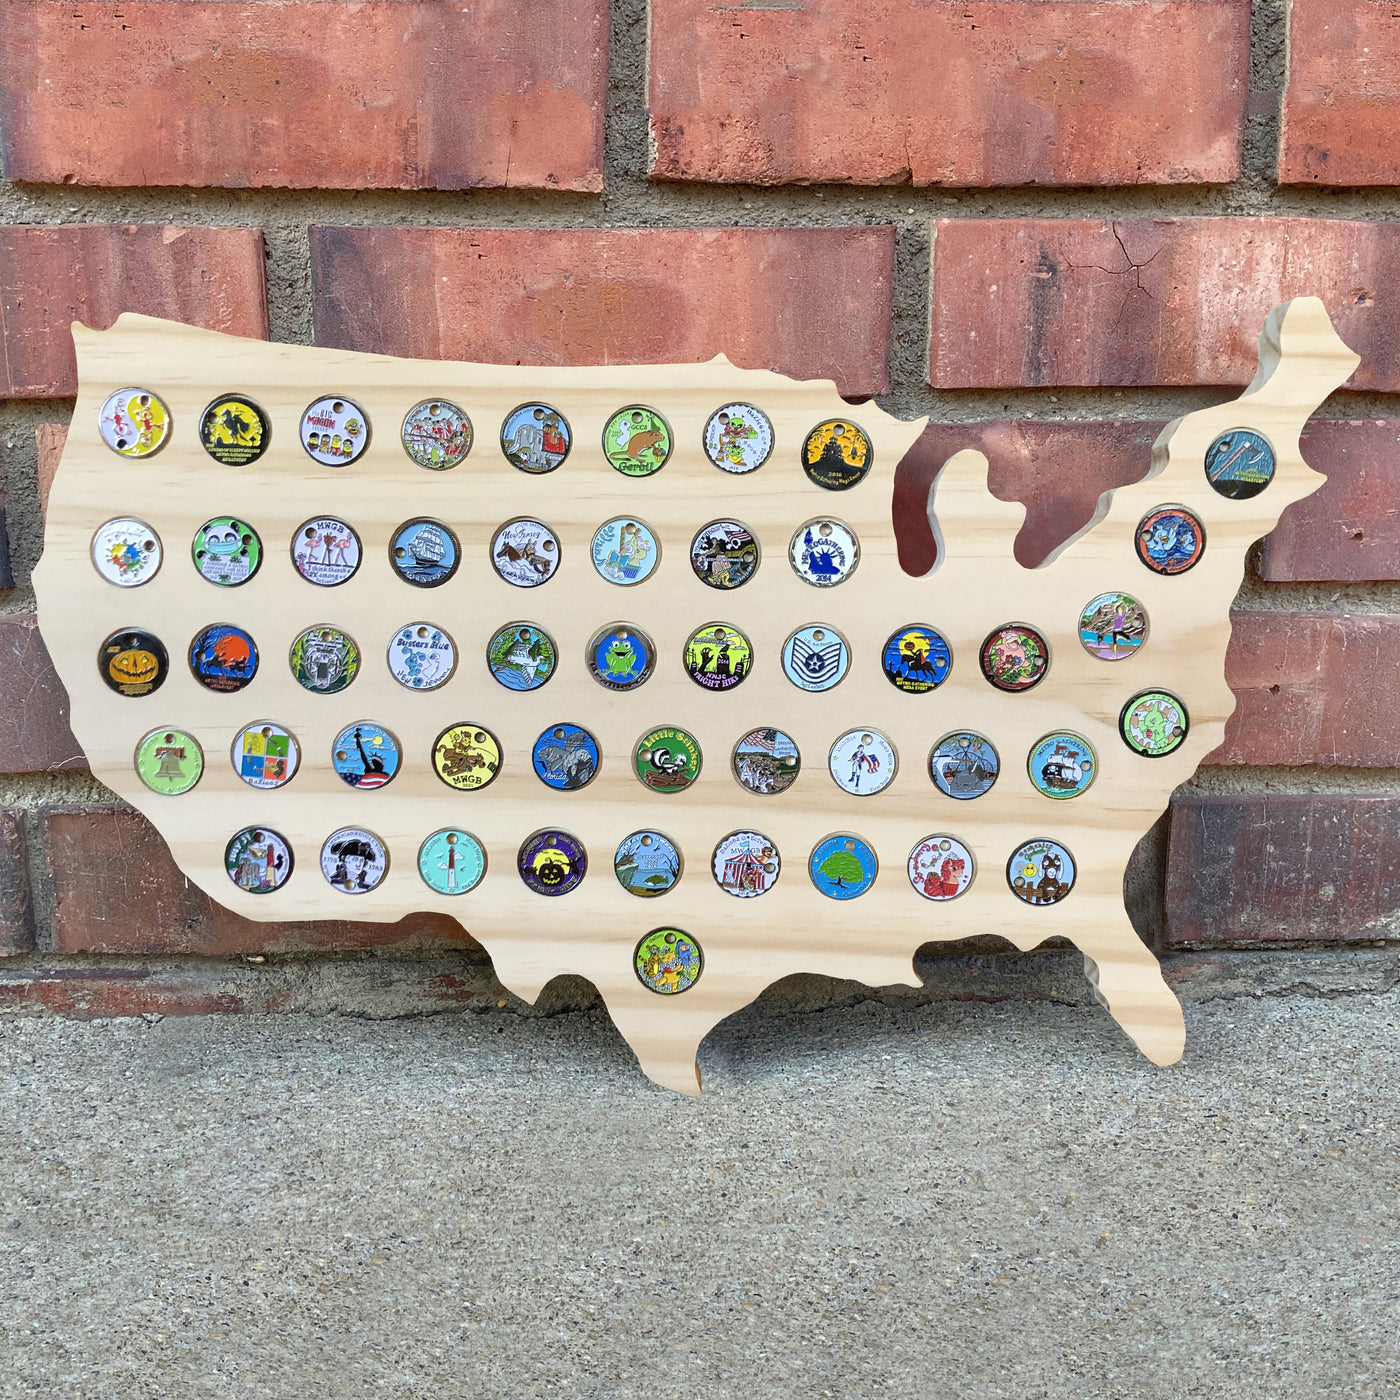 United States Pathtag Display